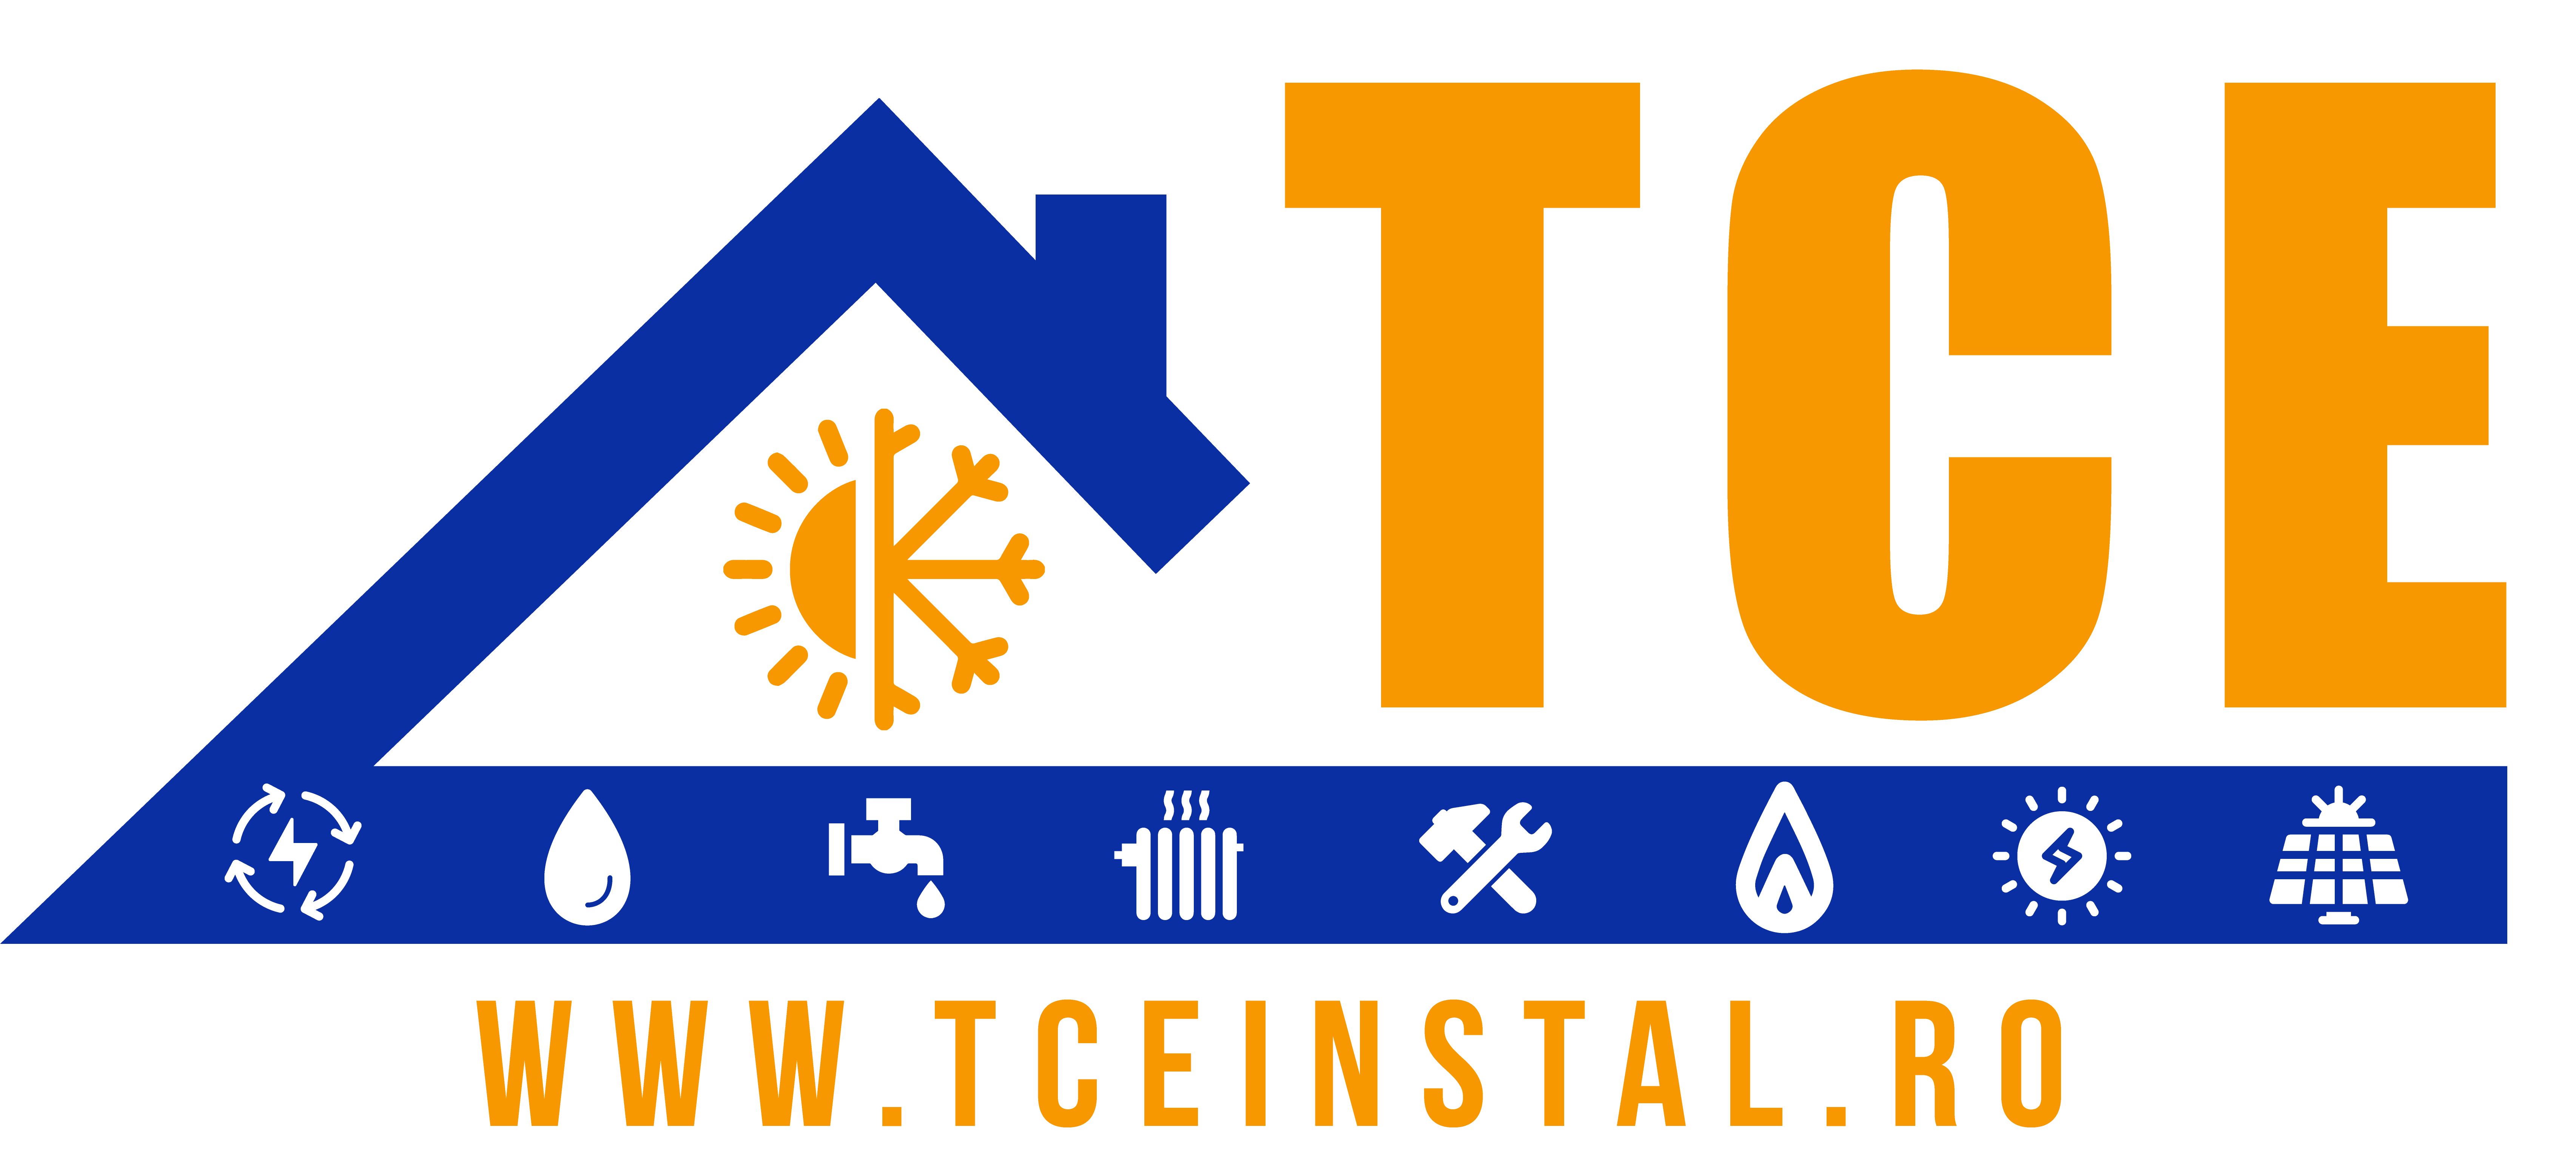 TCE-INSTAL